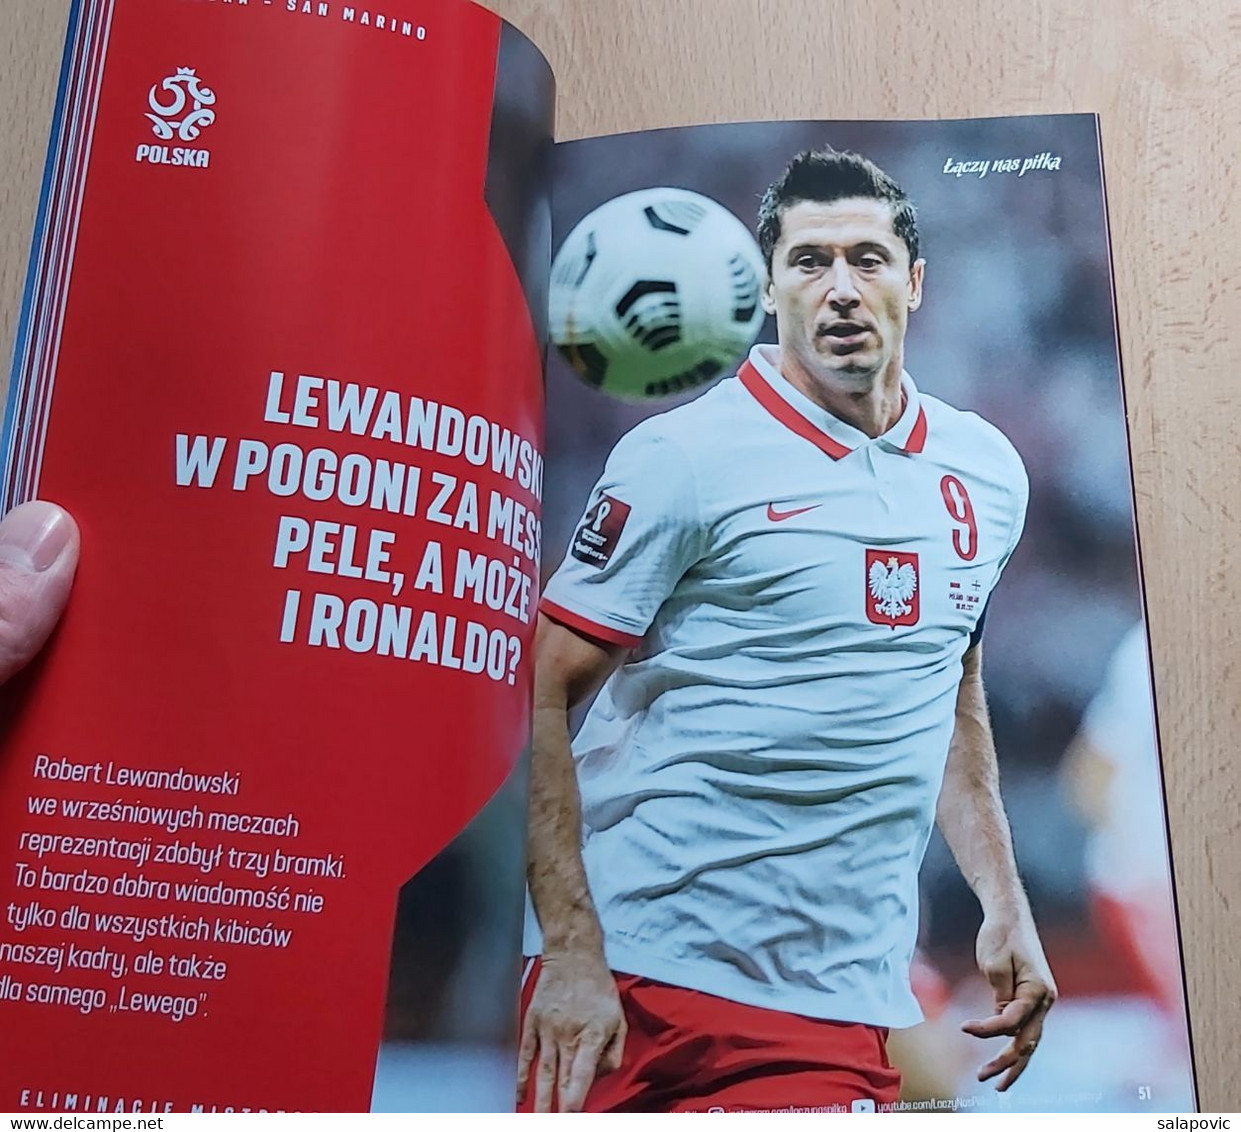 Poland V San Marino QUALIFICATIONS FOR FIFA WORLD CUP QATAR 2022, 9. 10. 2021 FOOTBALL CROATIA FOOTBALL MATCH PROGRAM - Books